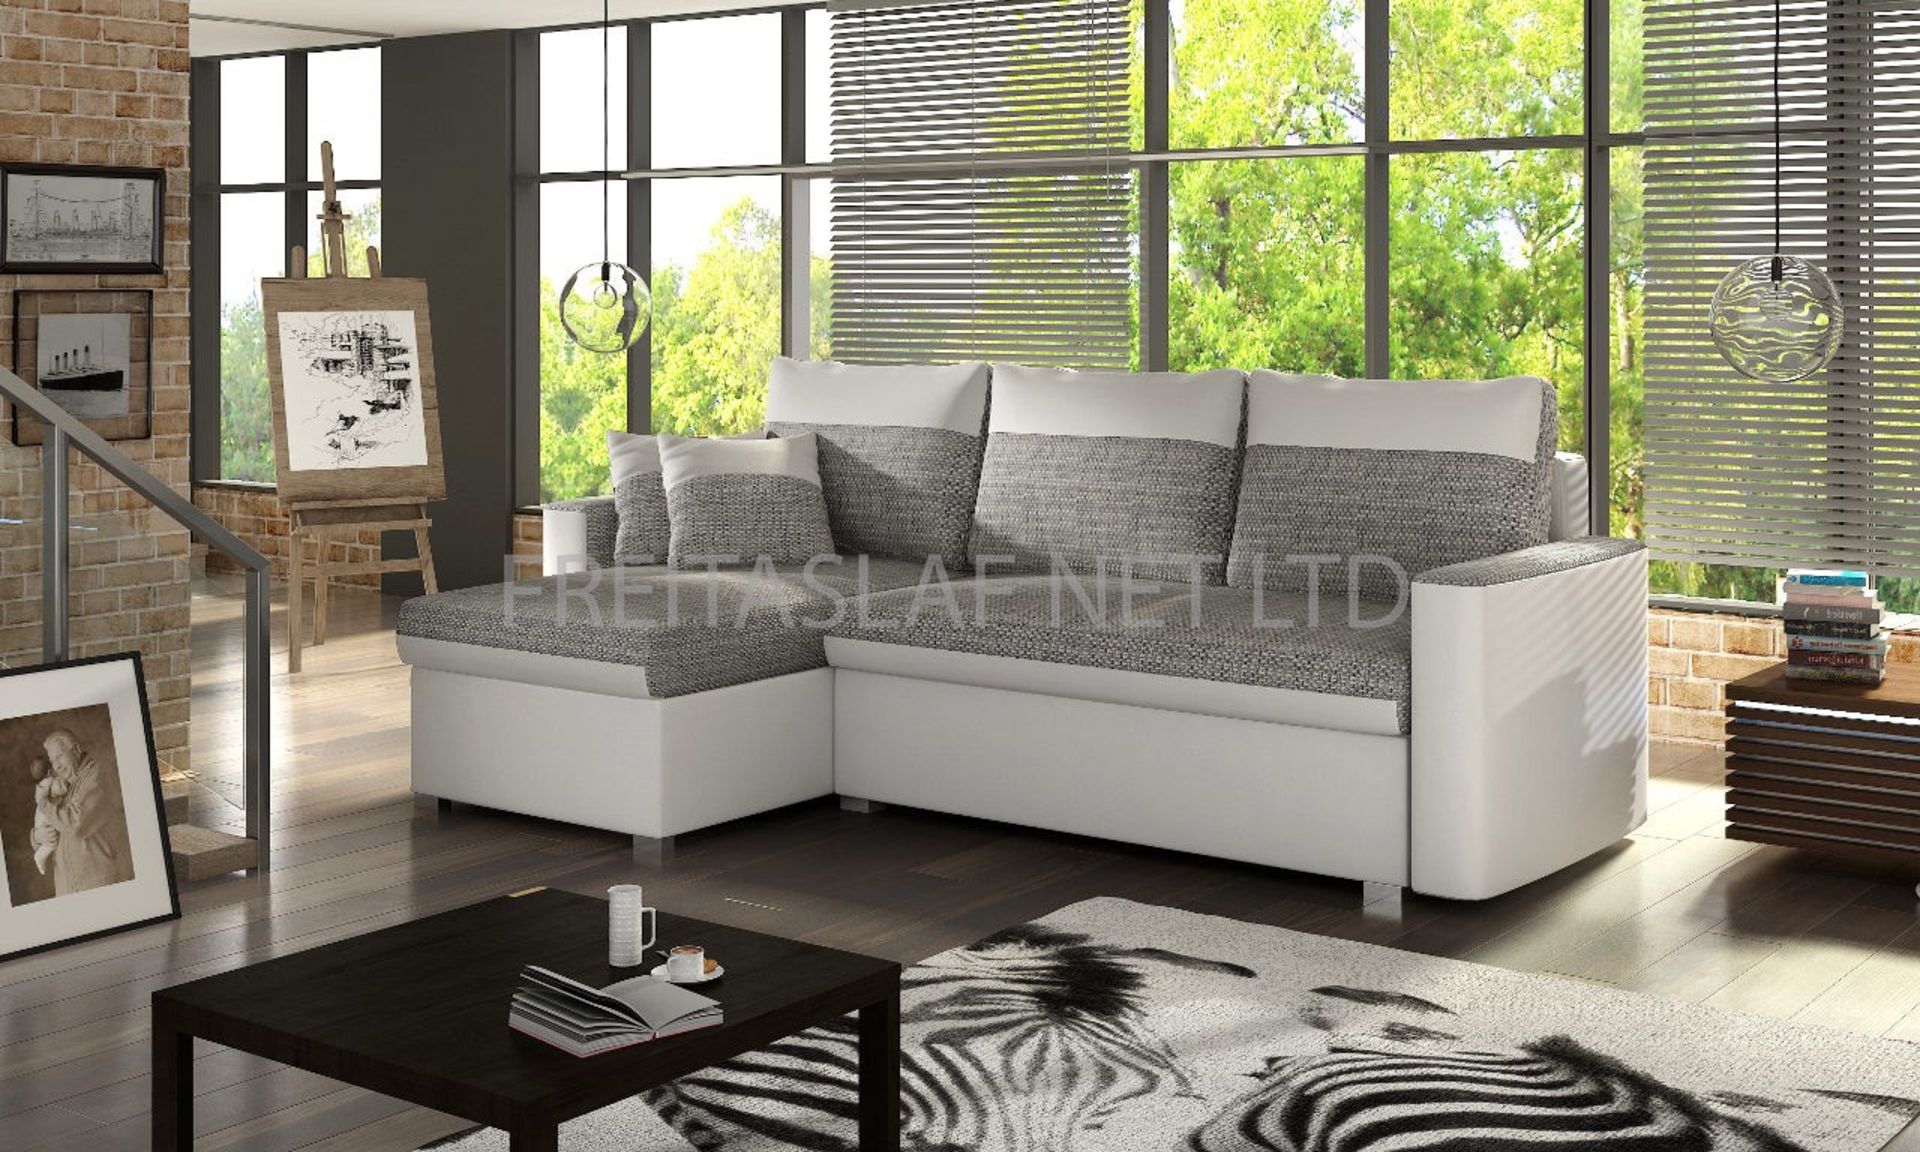 Brand New FlVio Right Hand Facing White/Grey Corner Pull Out Sofa Bed With Storage